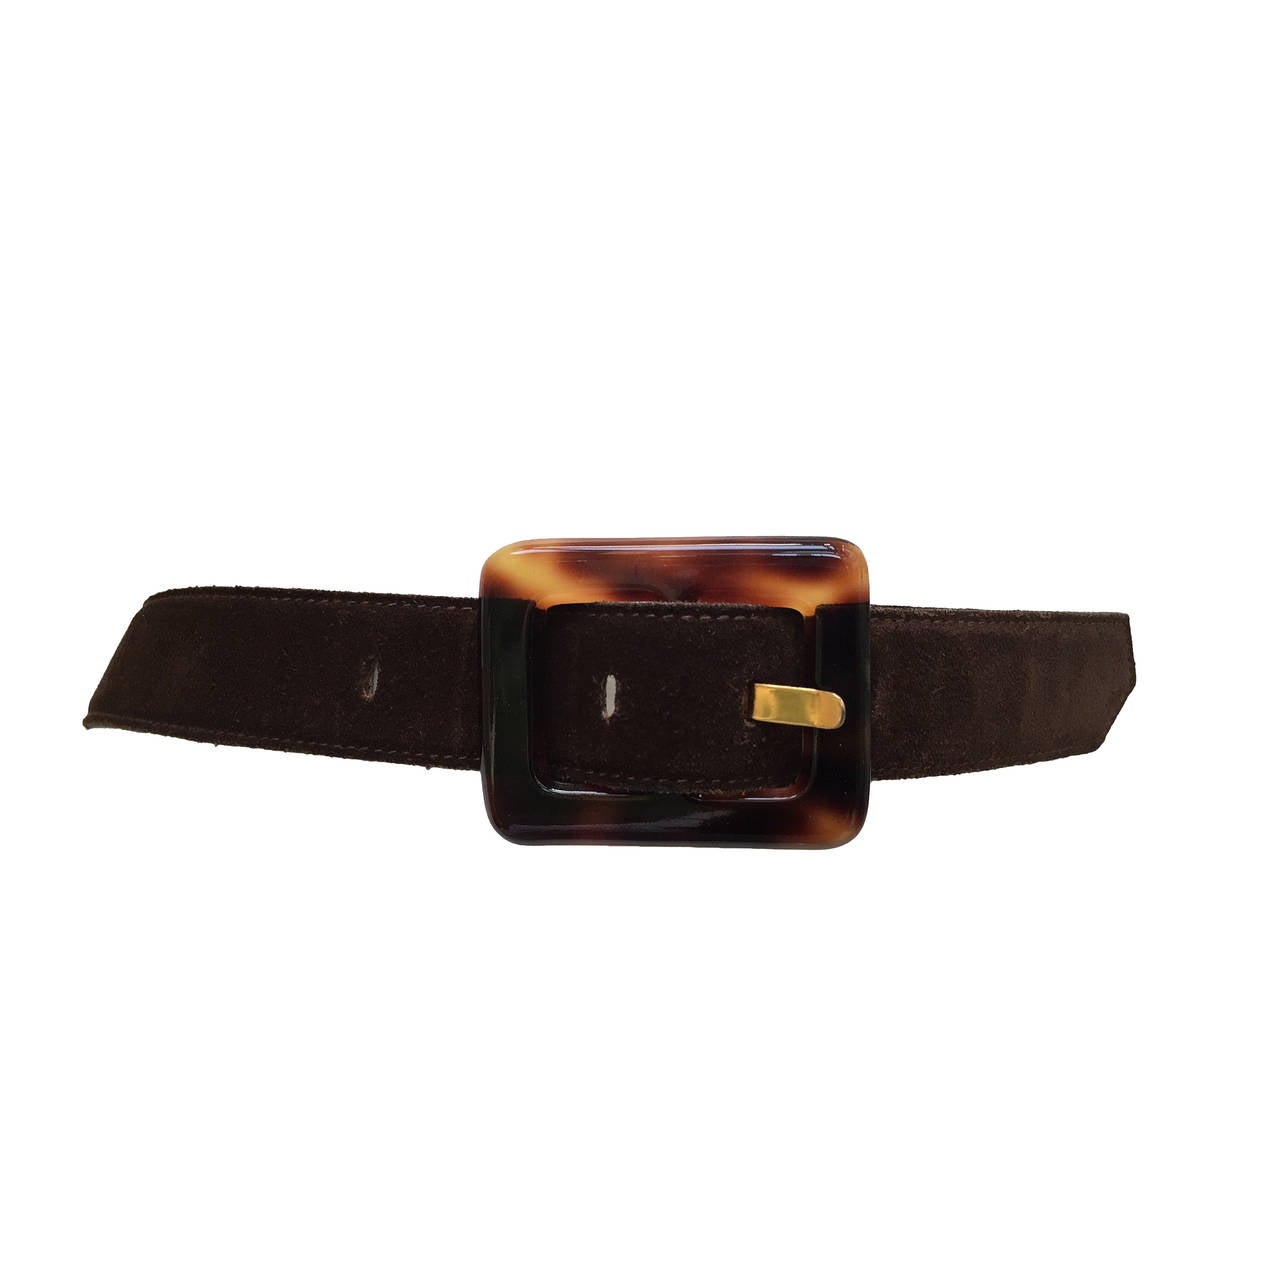 Yves Saint Laurent 80s brown suede tortoiseshell belt. For Sale